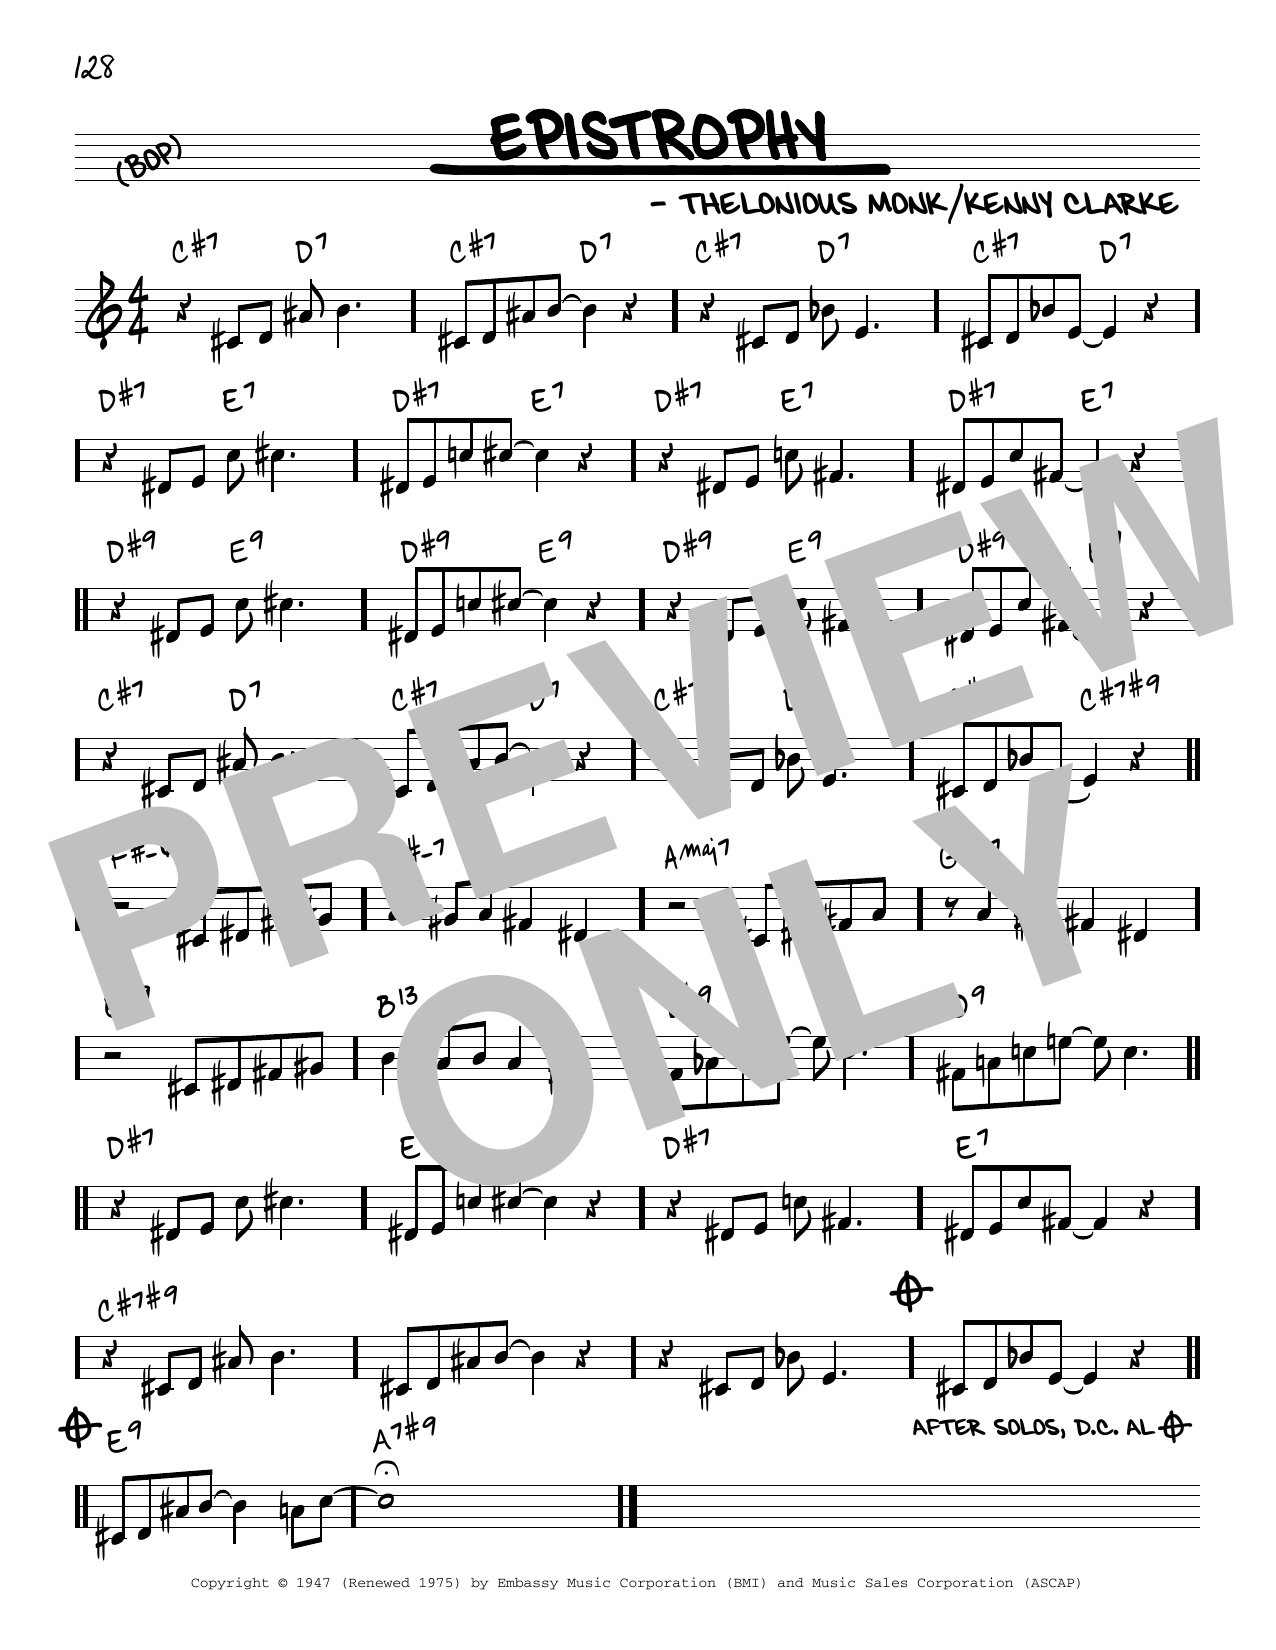 Download Thelonious Monk Epistrophy [Reharmonized version] (arr. Sheet Music